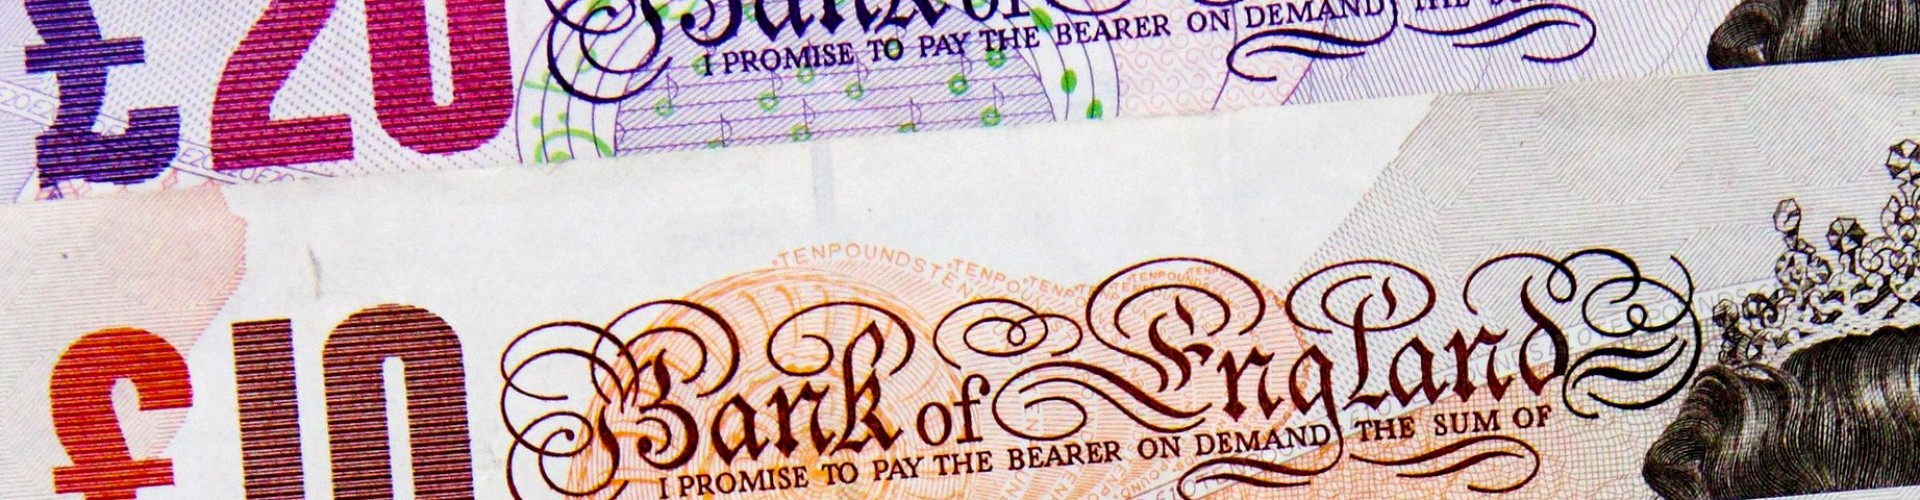 uk bank notes £20 £10 £5